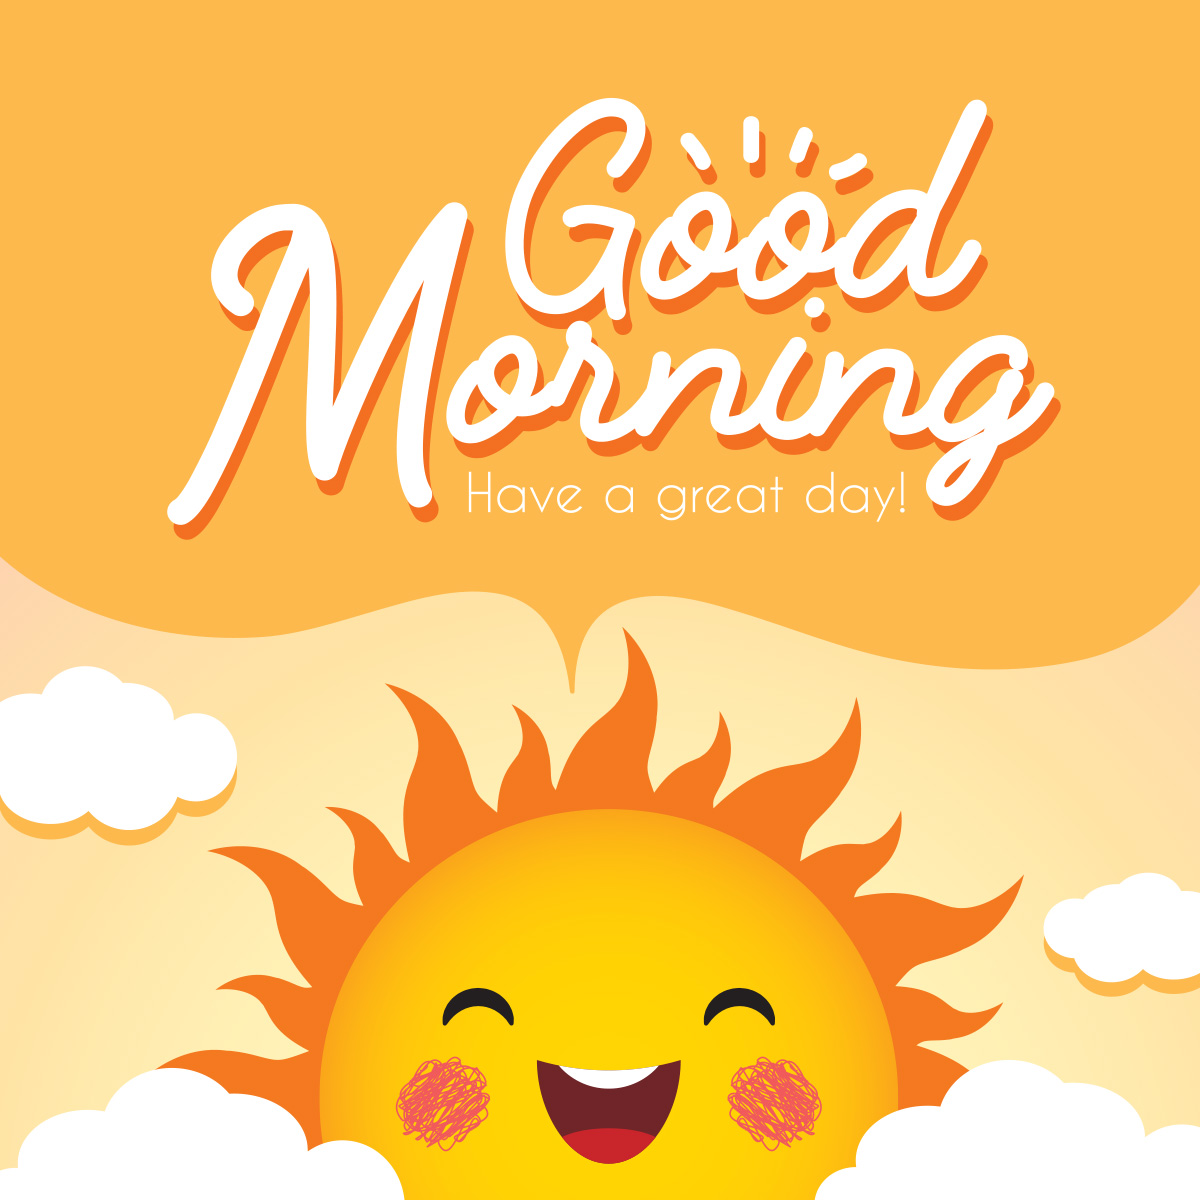 Открытка Good Morning с улыбающимся солнцем.